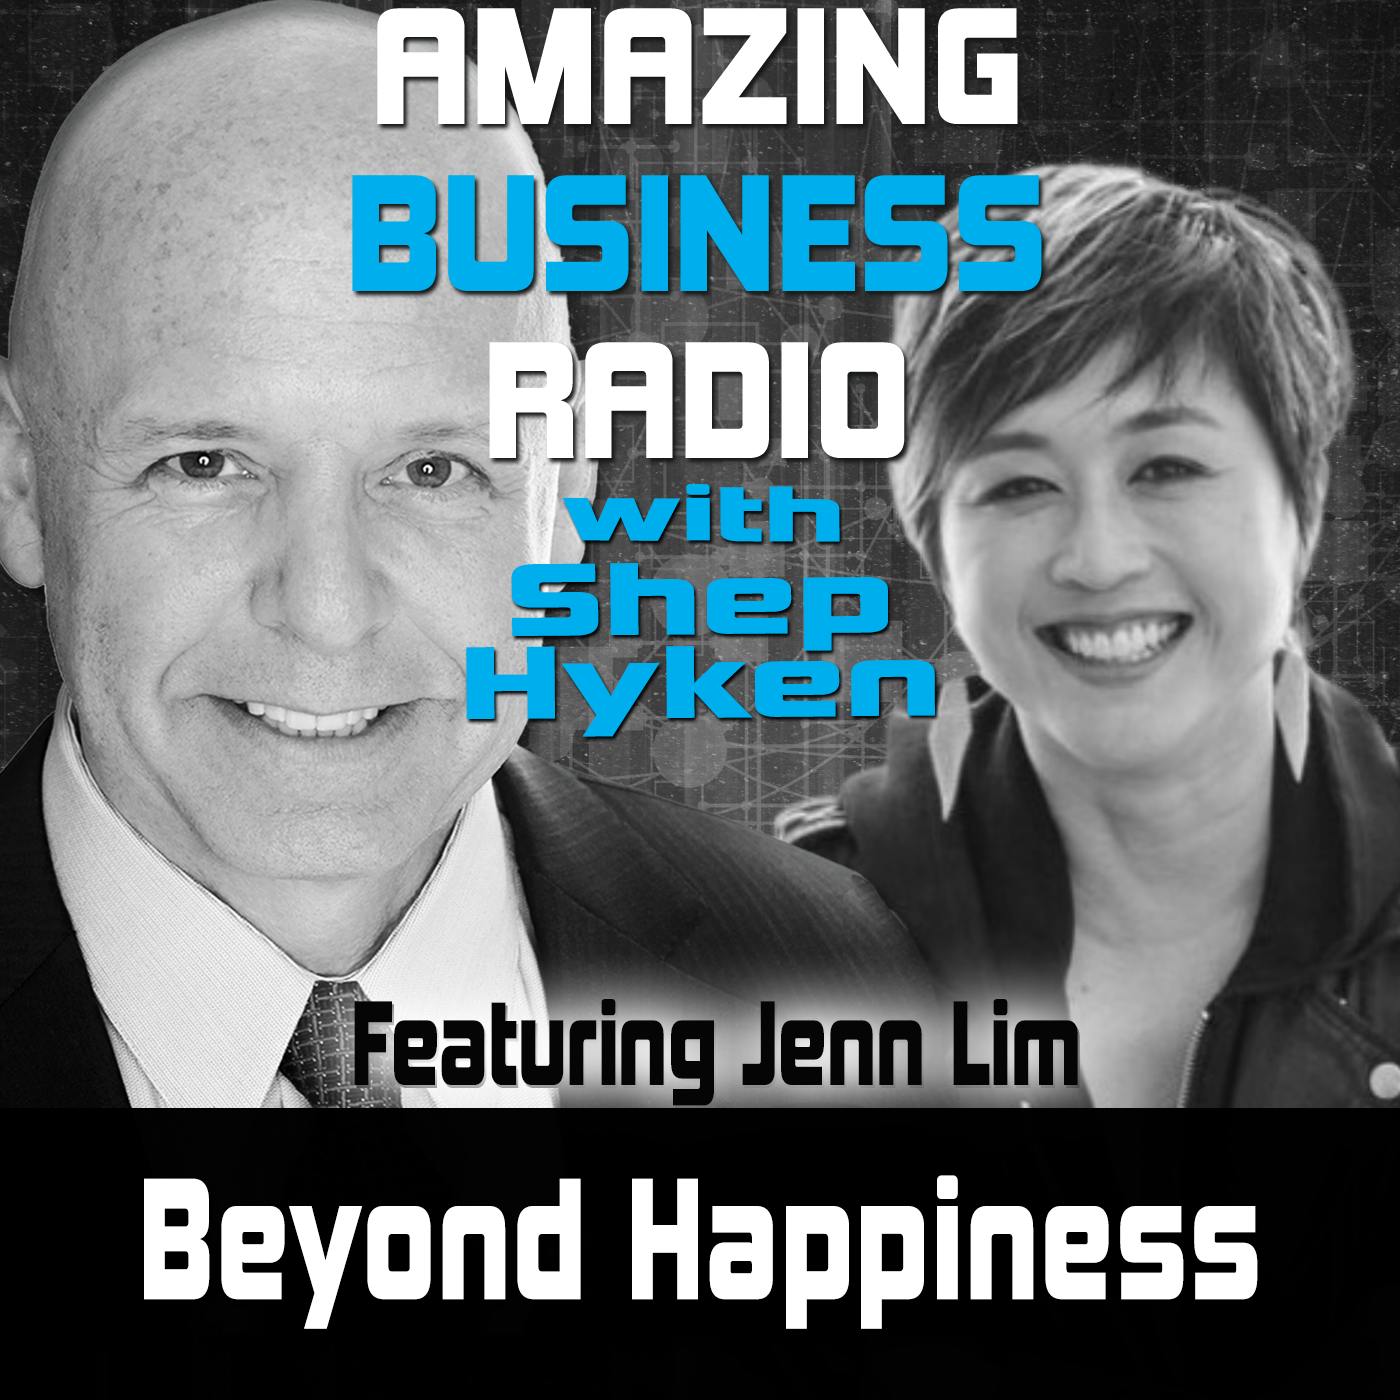 Beyond Happiness Featuring Jenn Lim